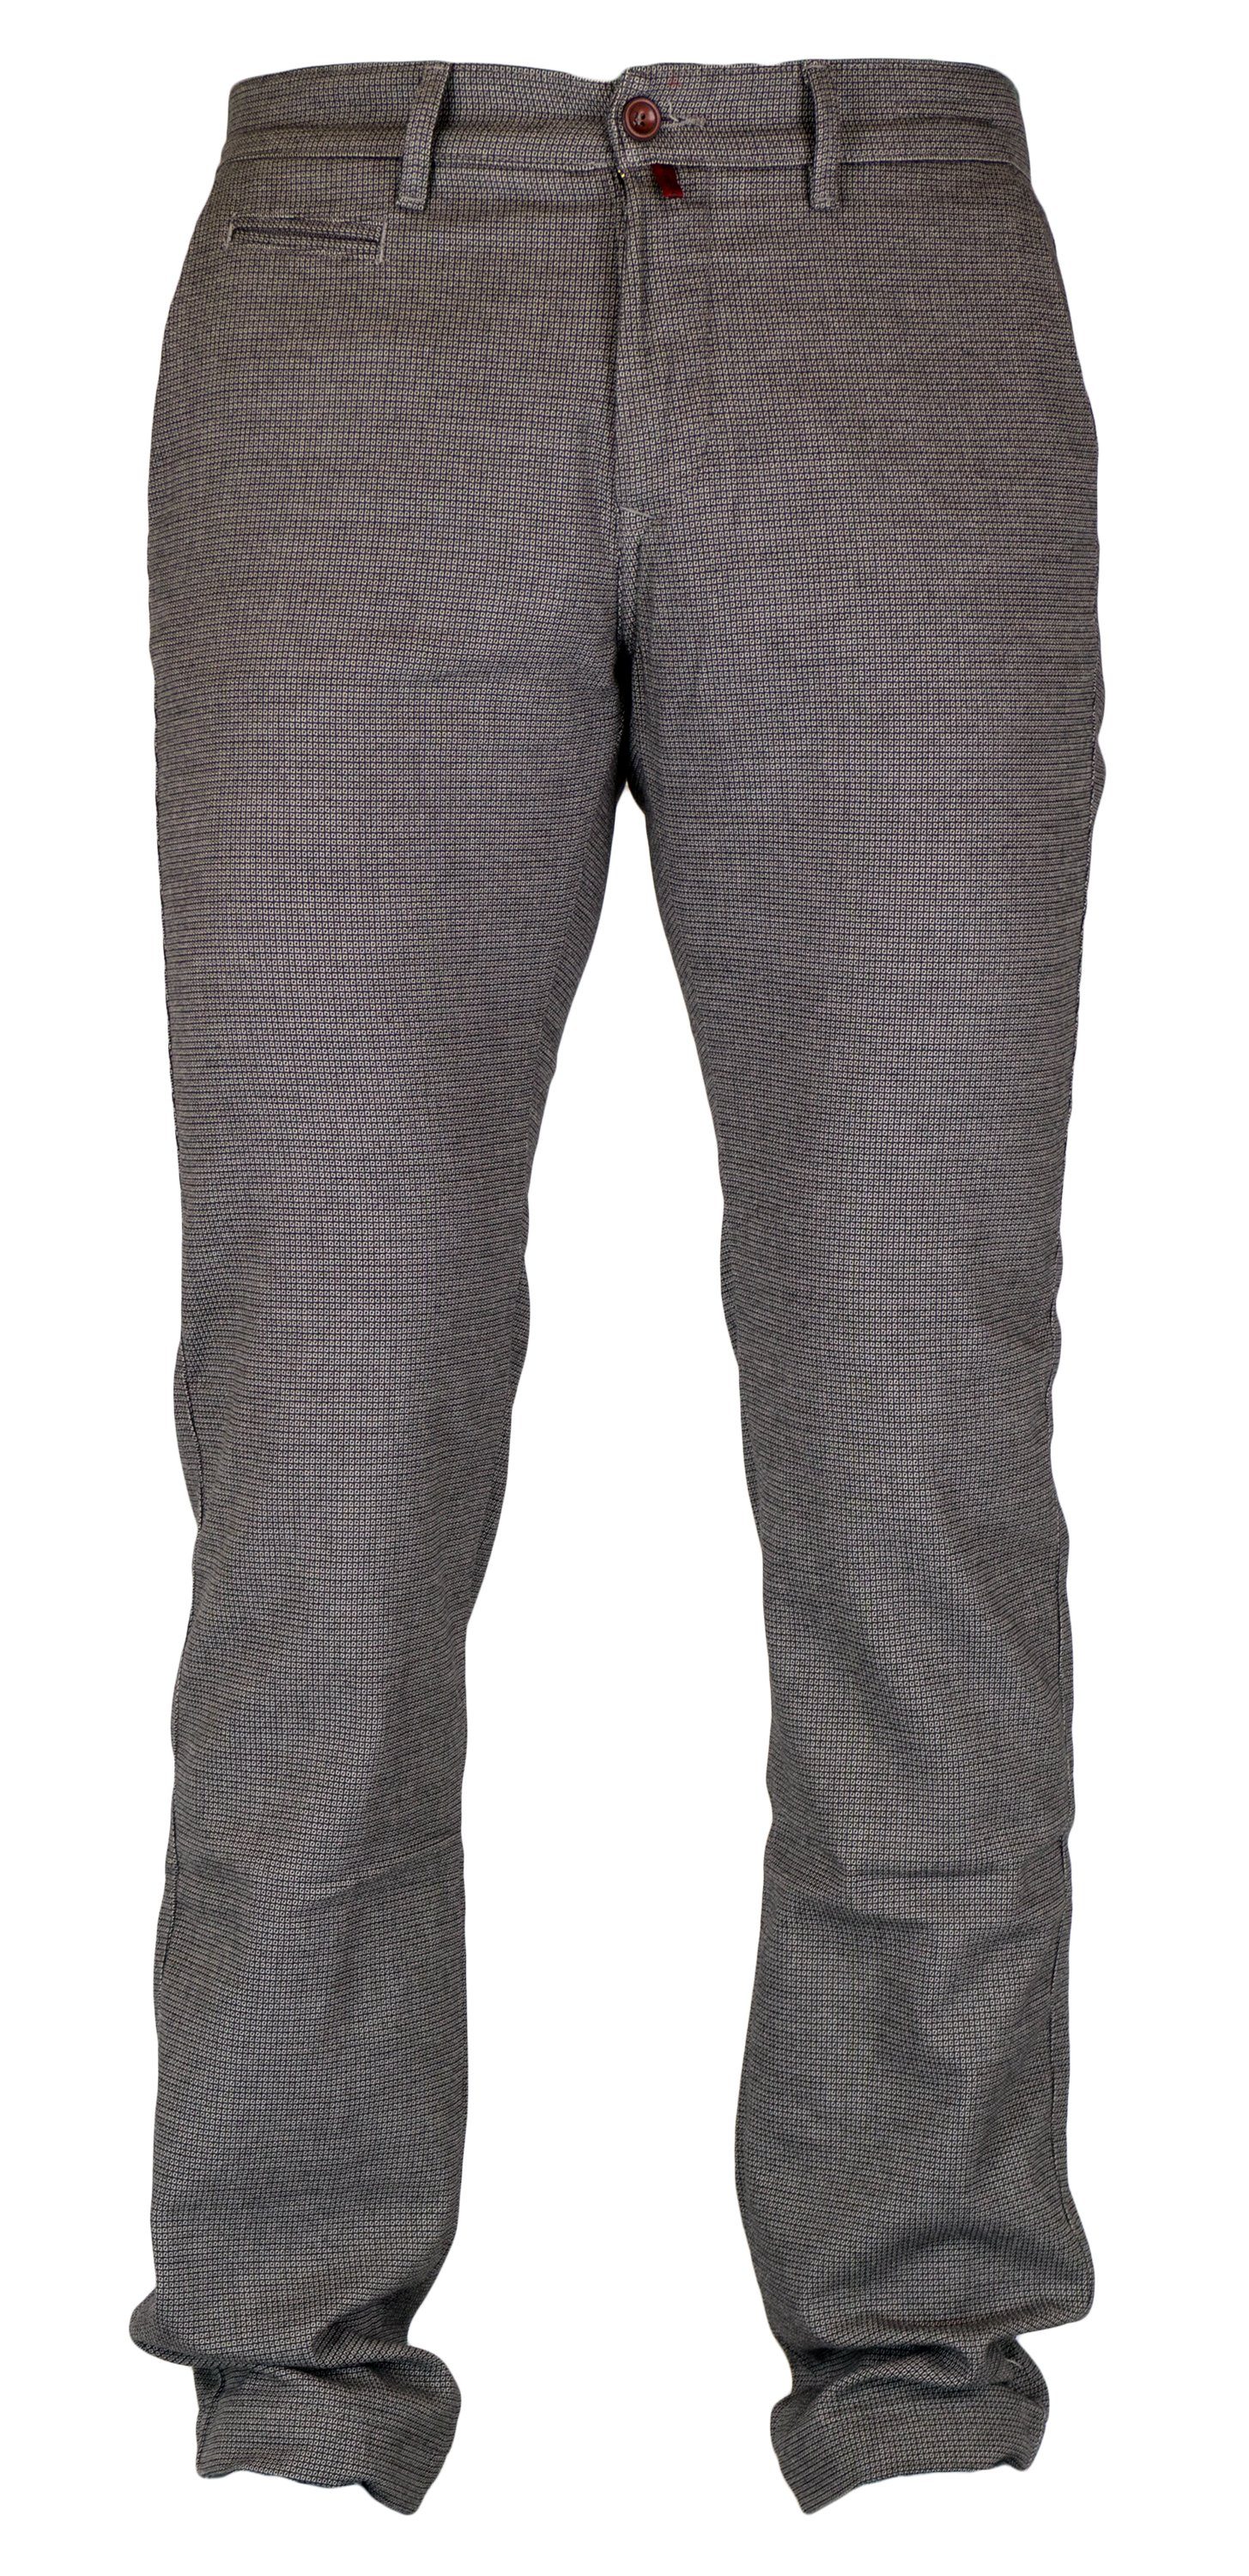 Pierre Cardin 5-Pocket-Jeans LYON 33747 chino 4738.25 mixed - CARDIN VOYAGE PIERRE grey